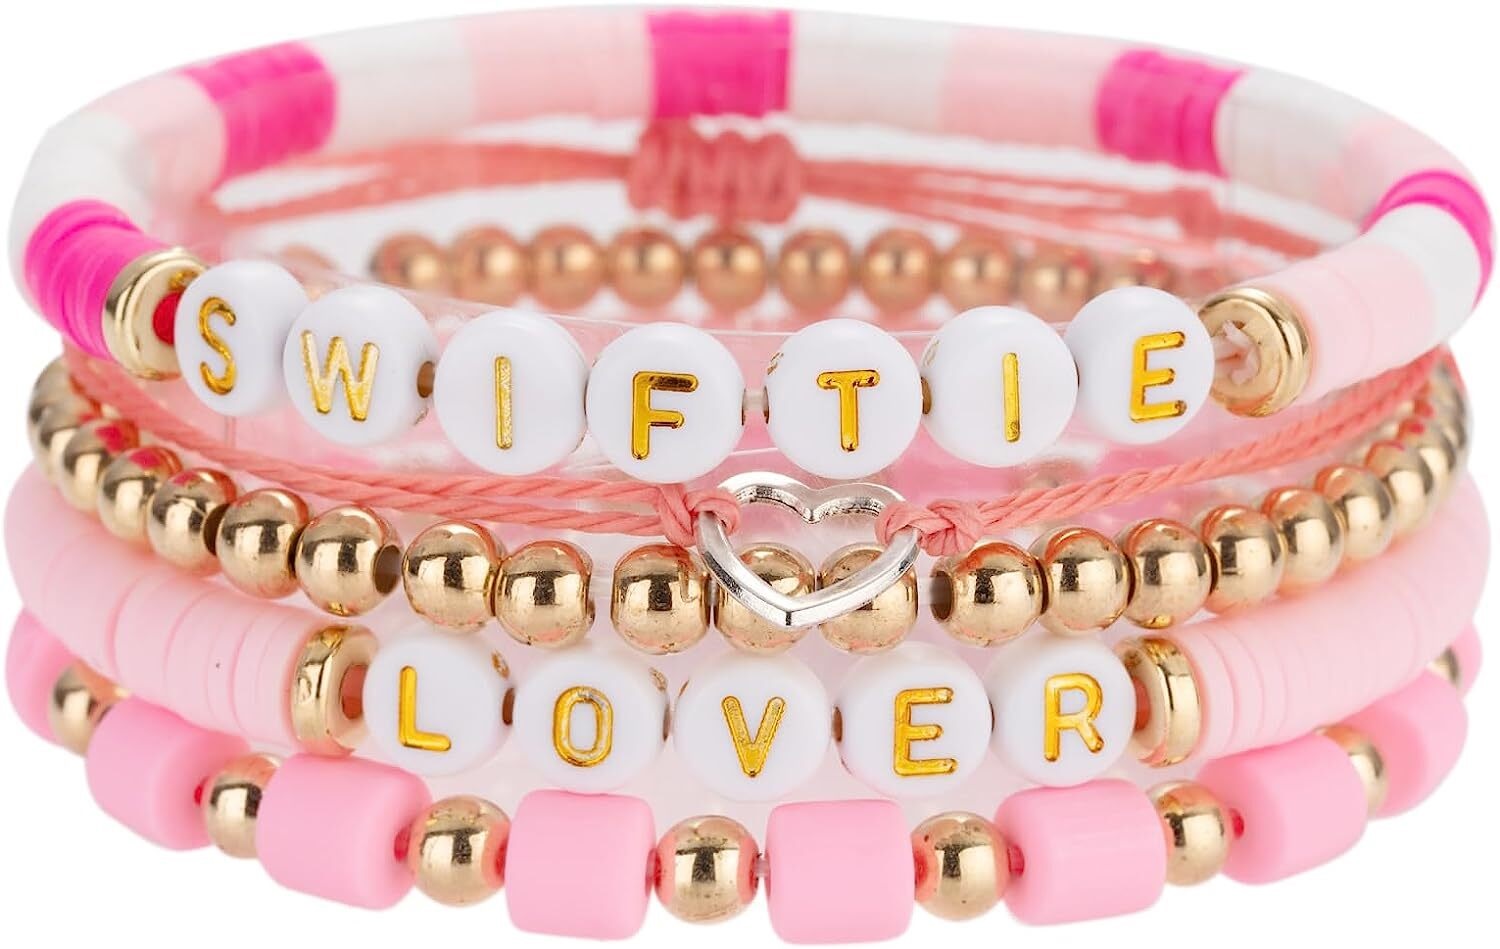 Taylor Swift Fans Gifts - Swift Charm Bracelet, Lover Reputation